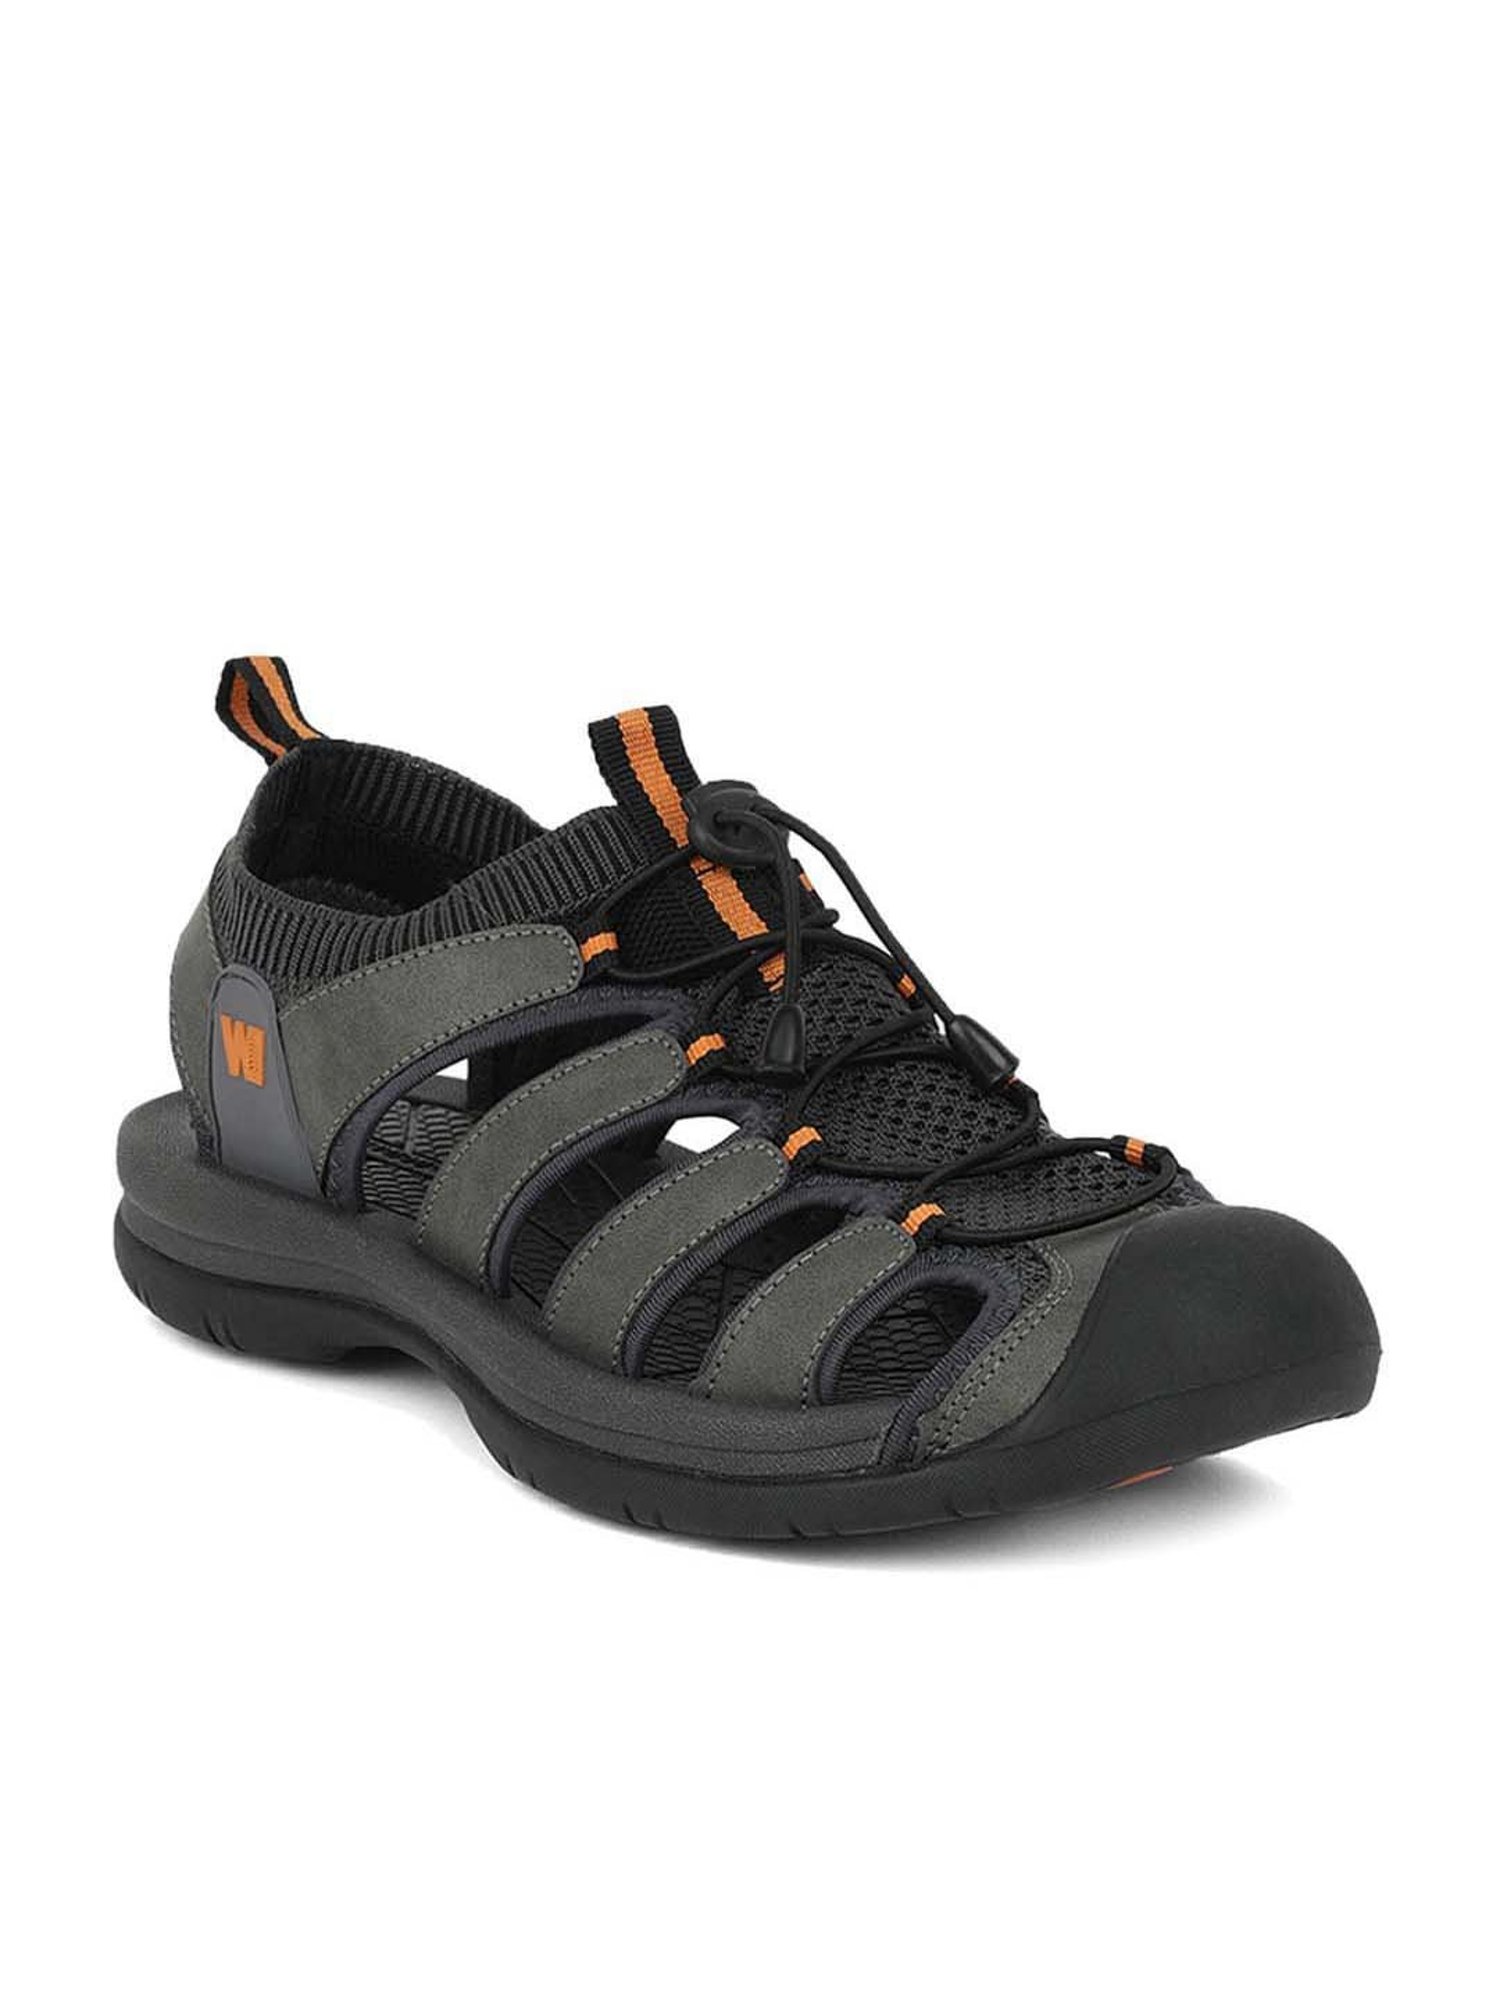 Buy Keen Newport H2 Sandals online at Sport Conrad